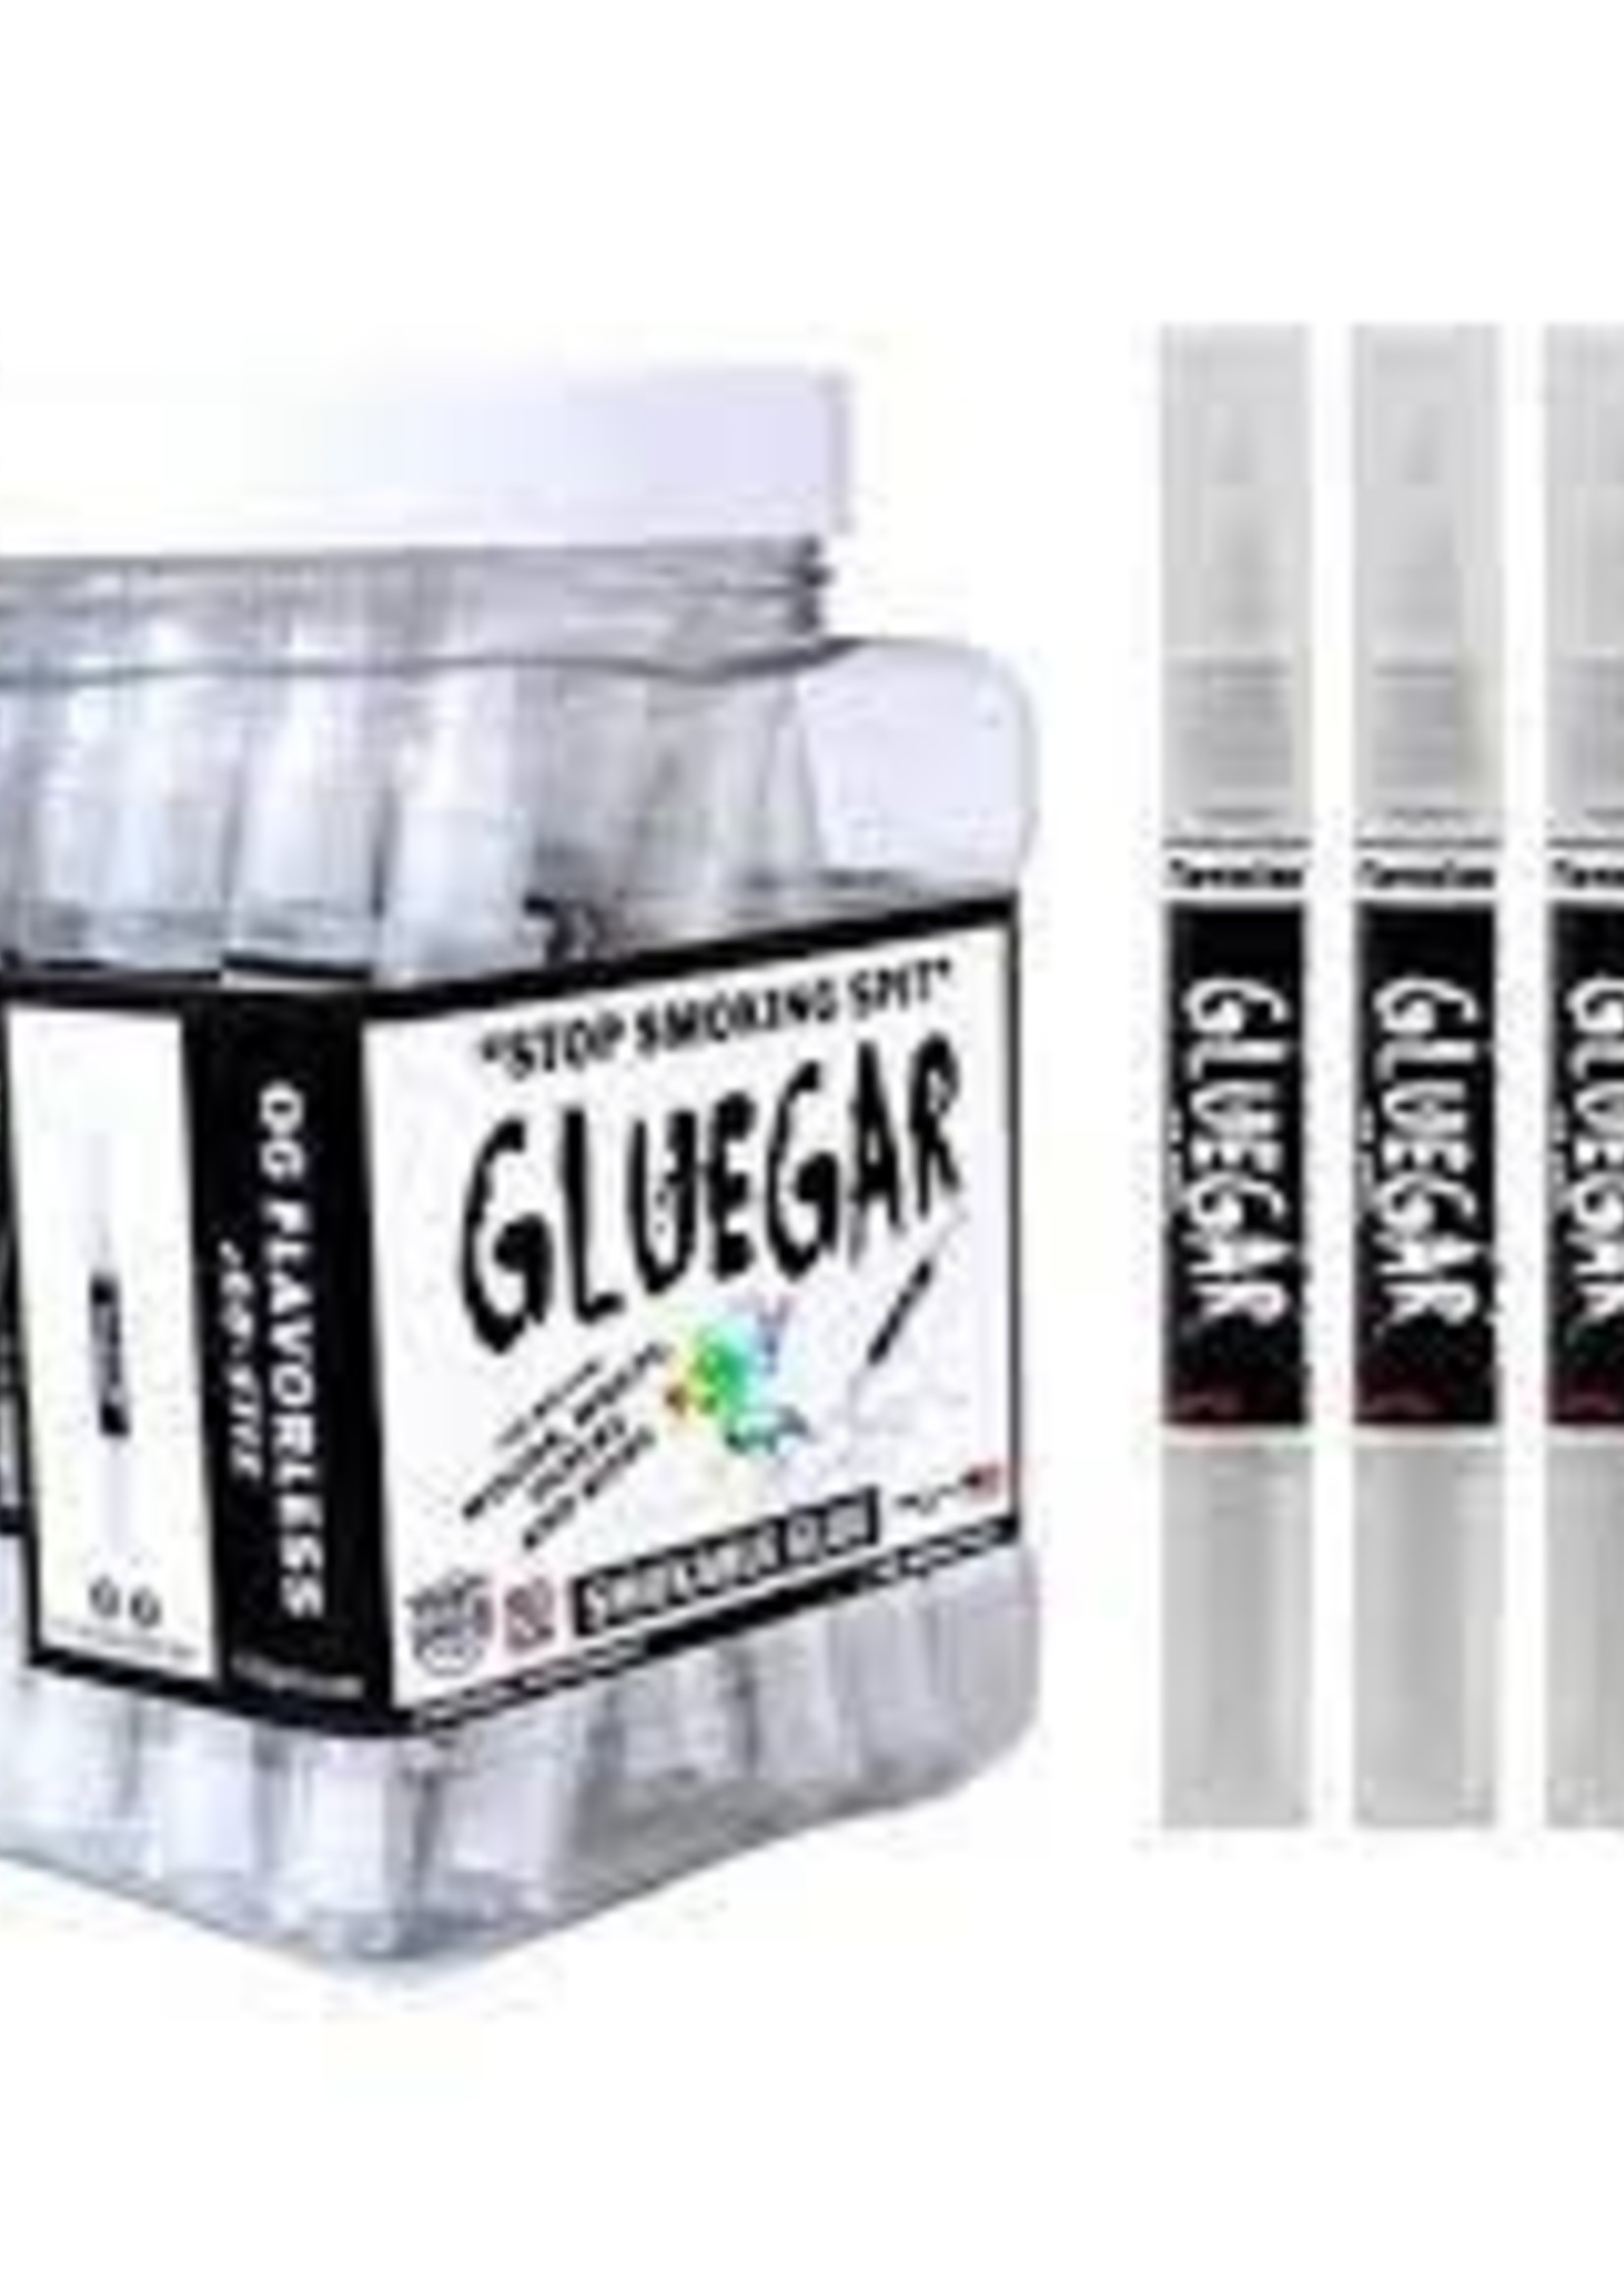 Gluegar 3ml Brush Tip Pen Flavorless